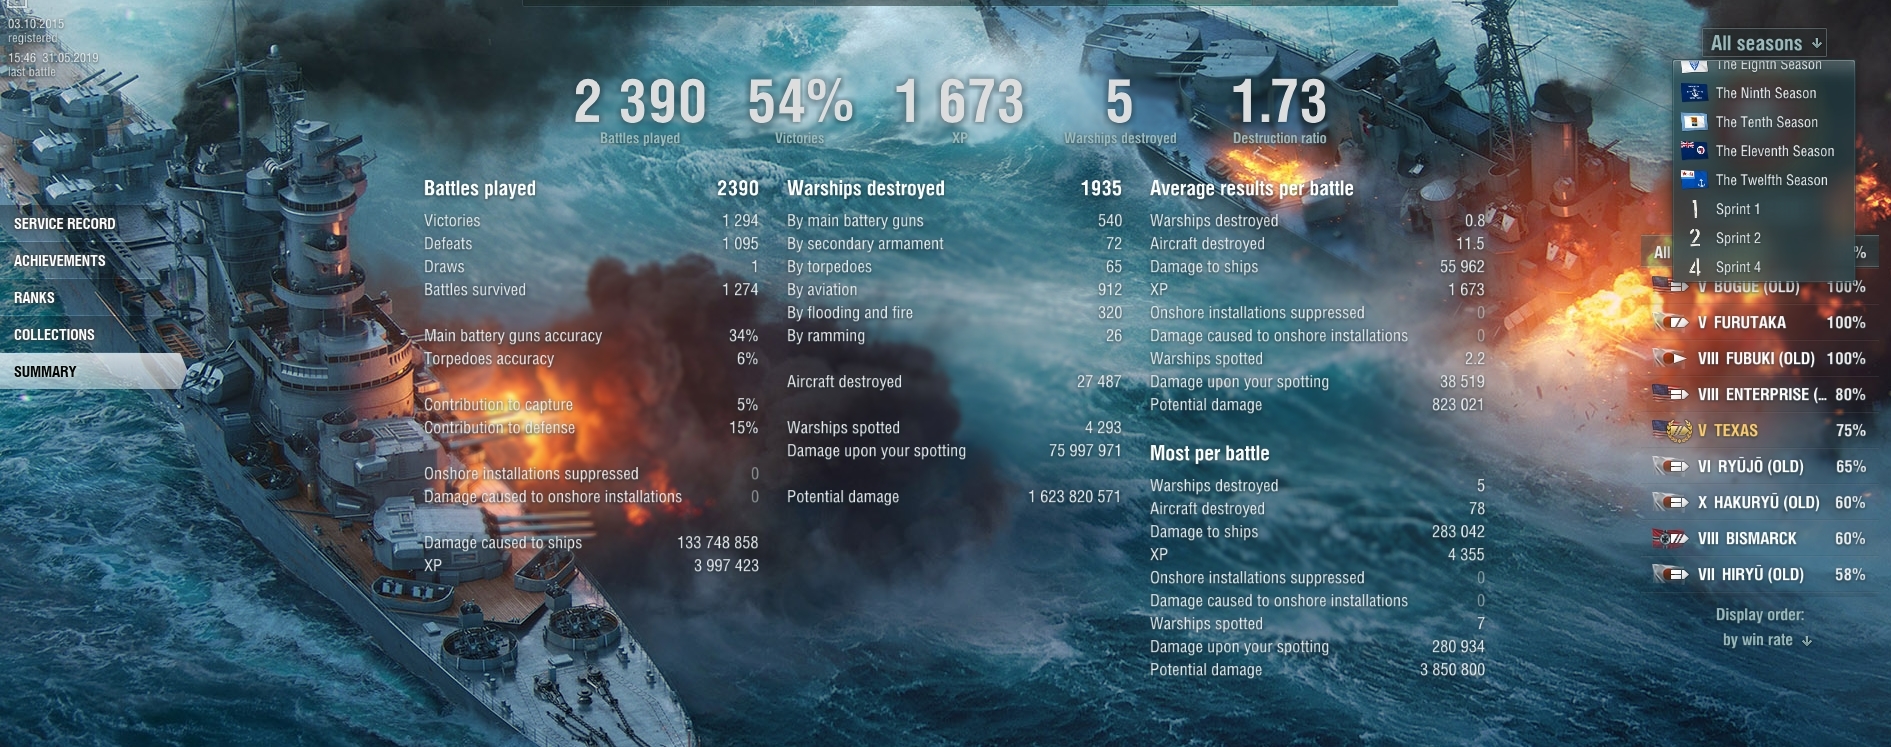 world of warships season 9 ranked